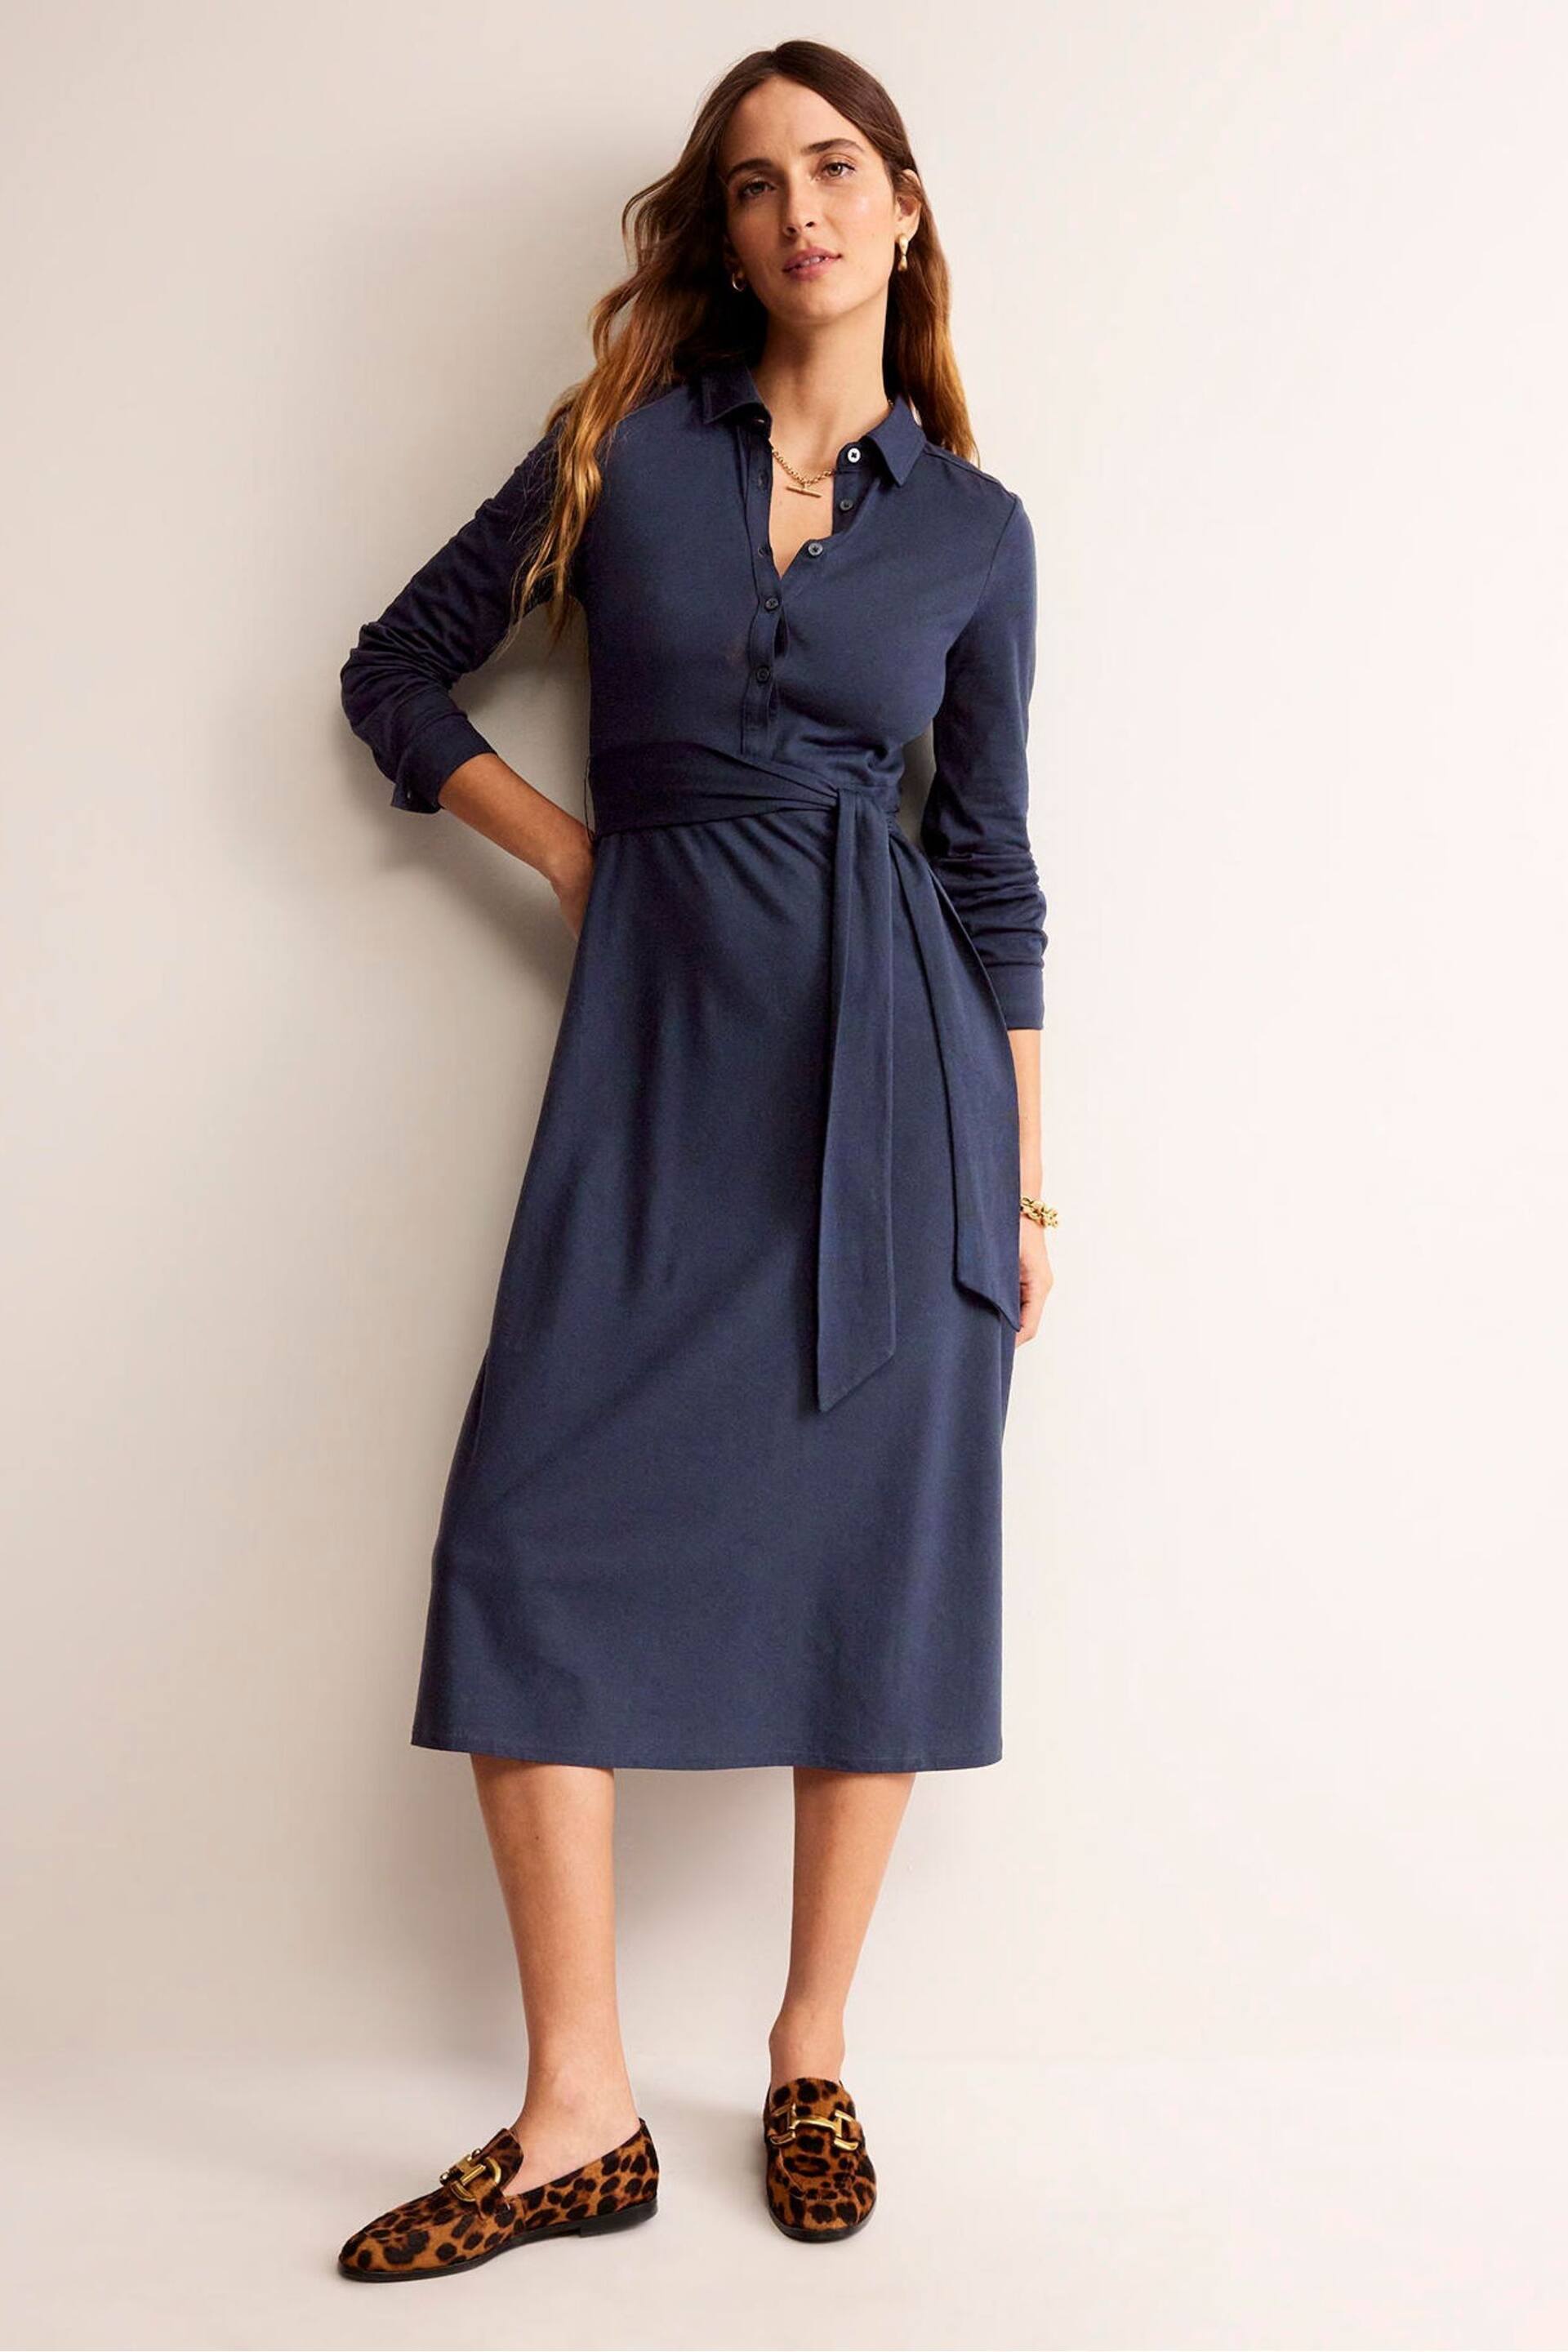 Boden Blue Laura Jersey Midi Shirt Dress - Image 1 of 5